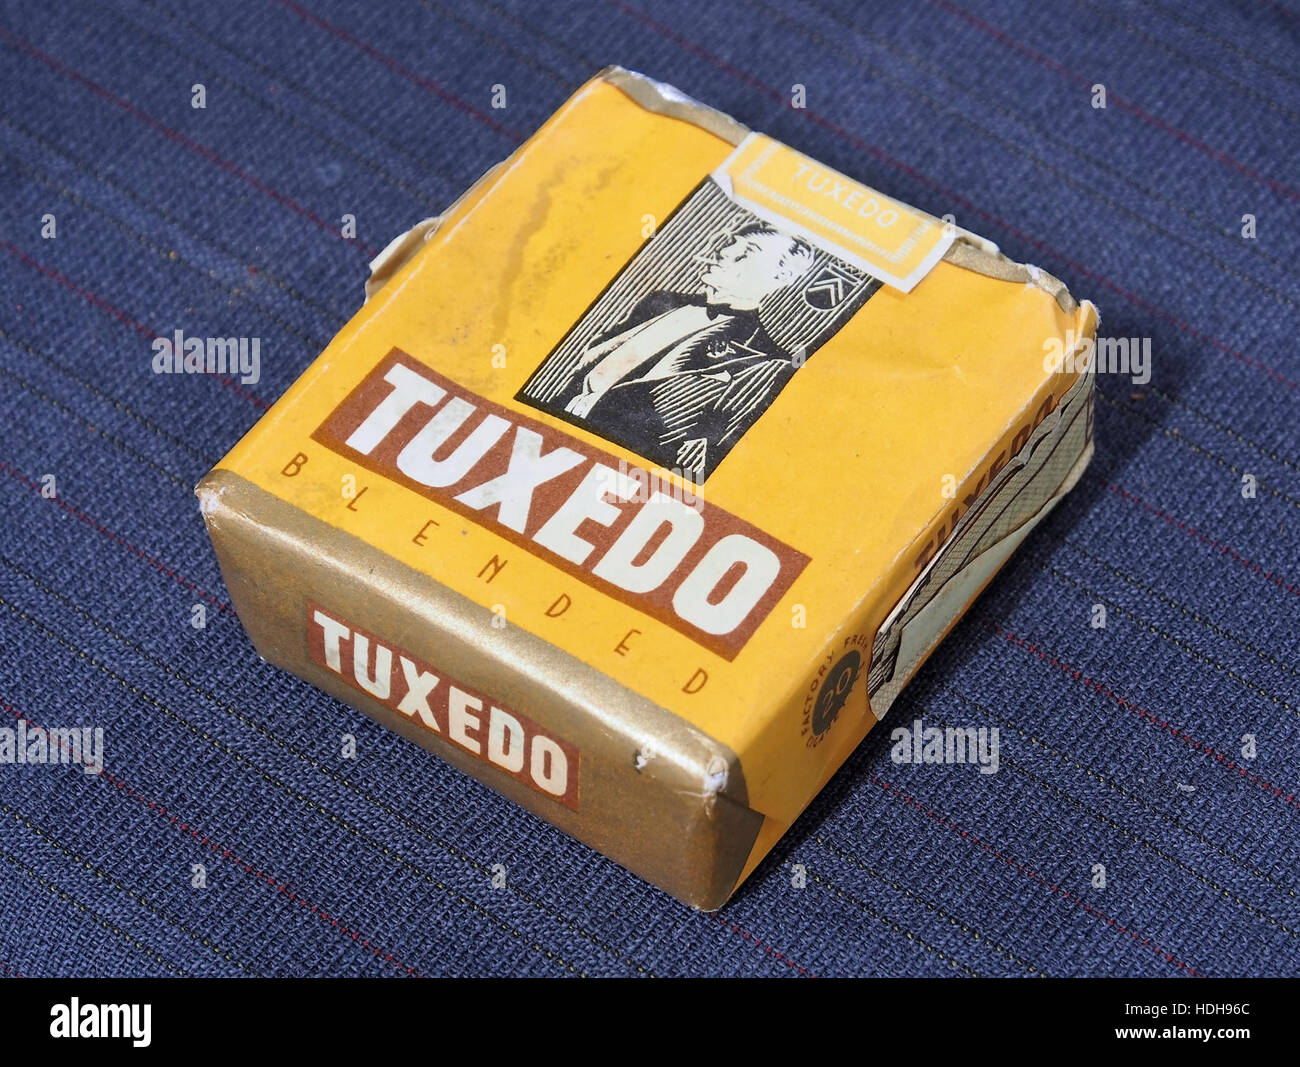 Tuxedo sigarette pack pic1 Foto Stock